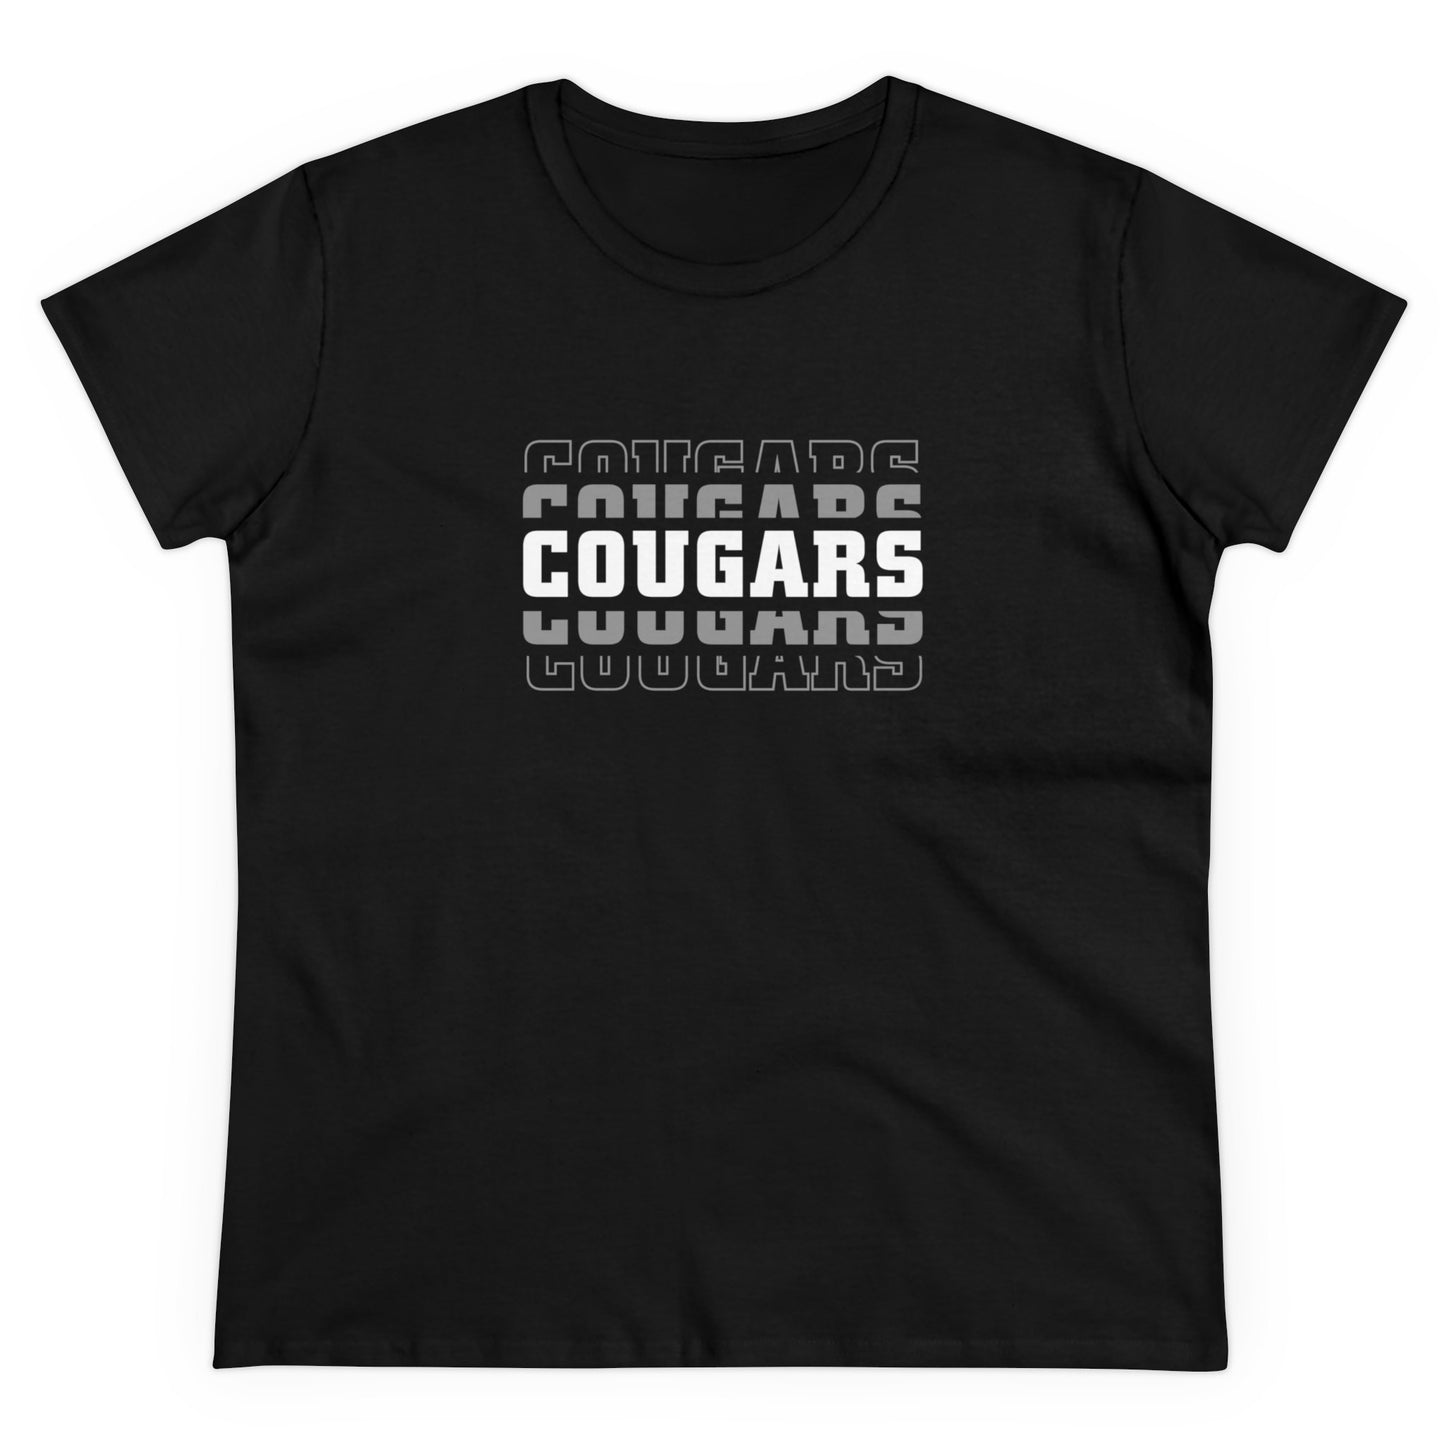 Cougars, Cougars, Cougars - Women's Shirt